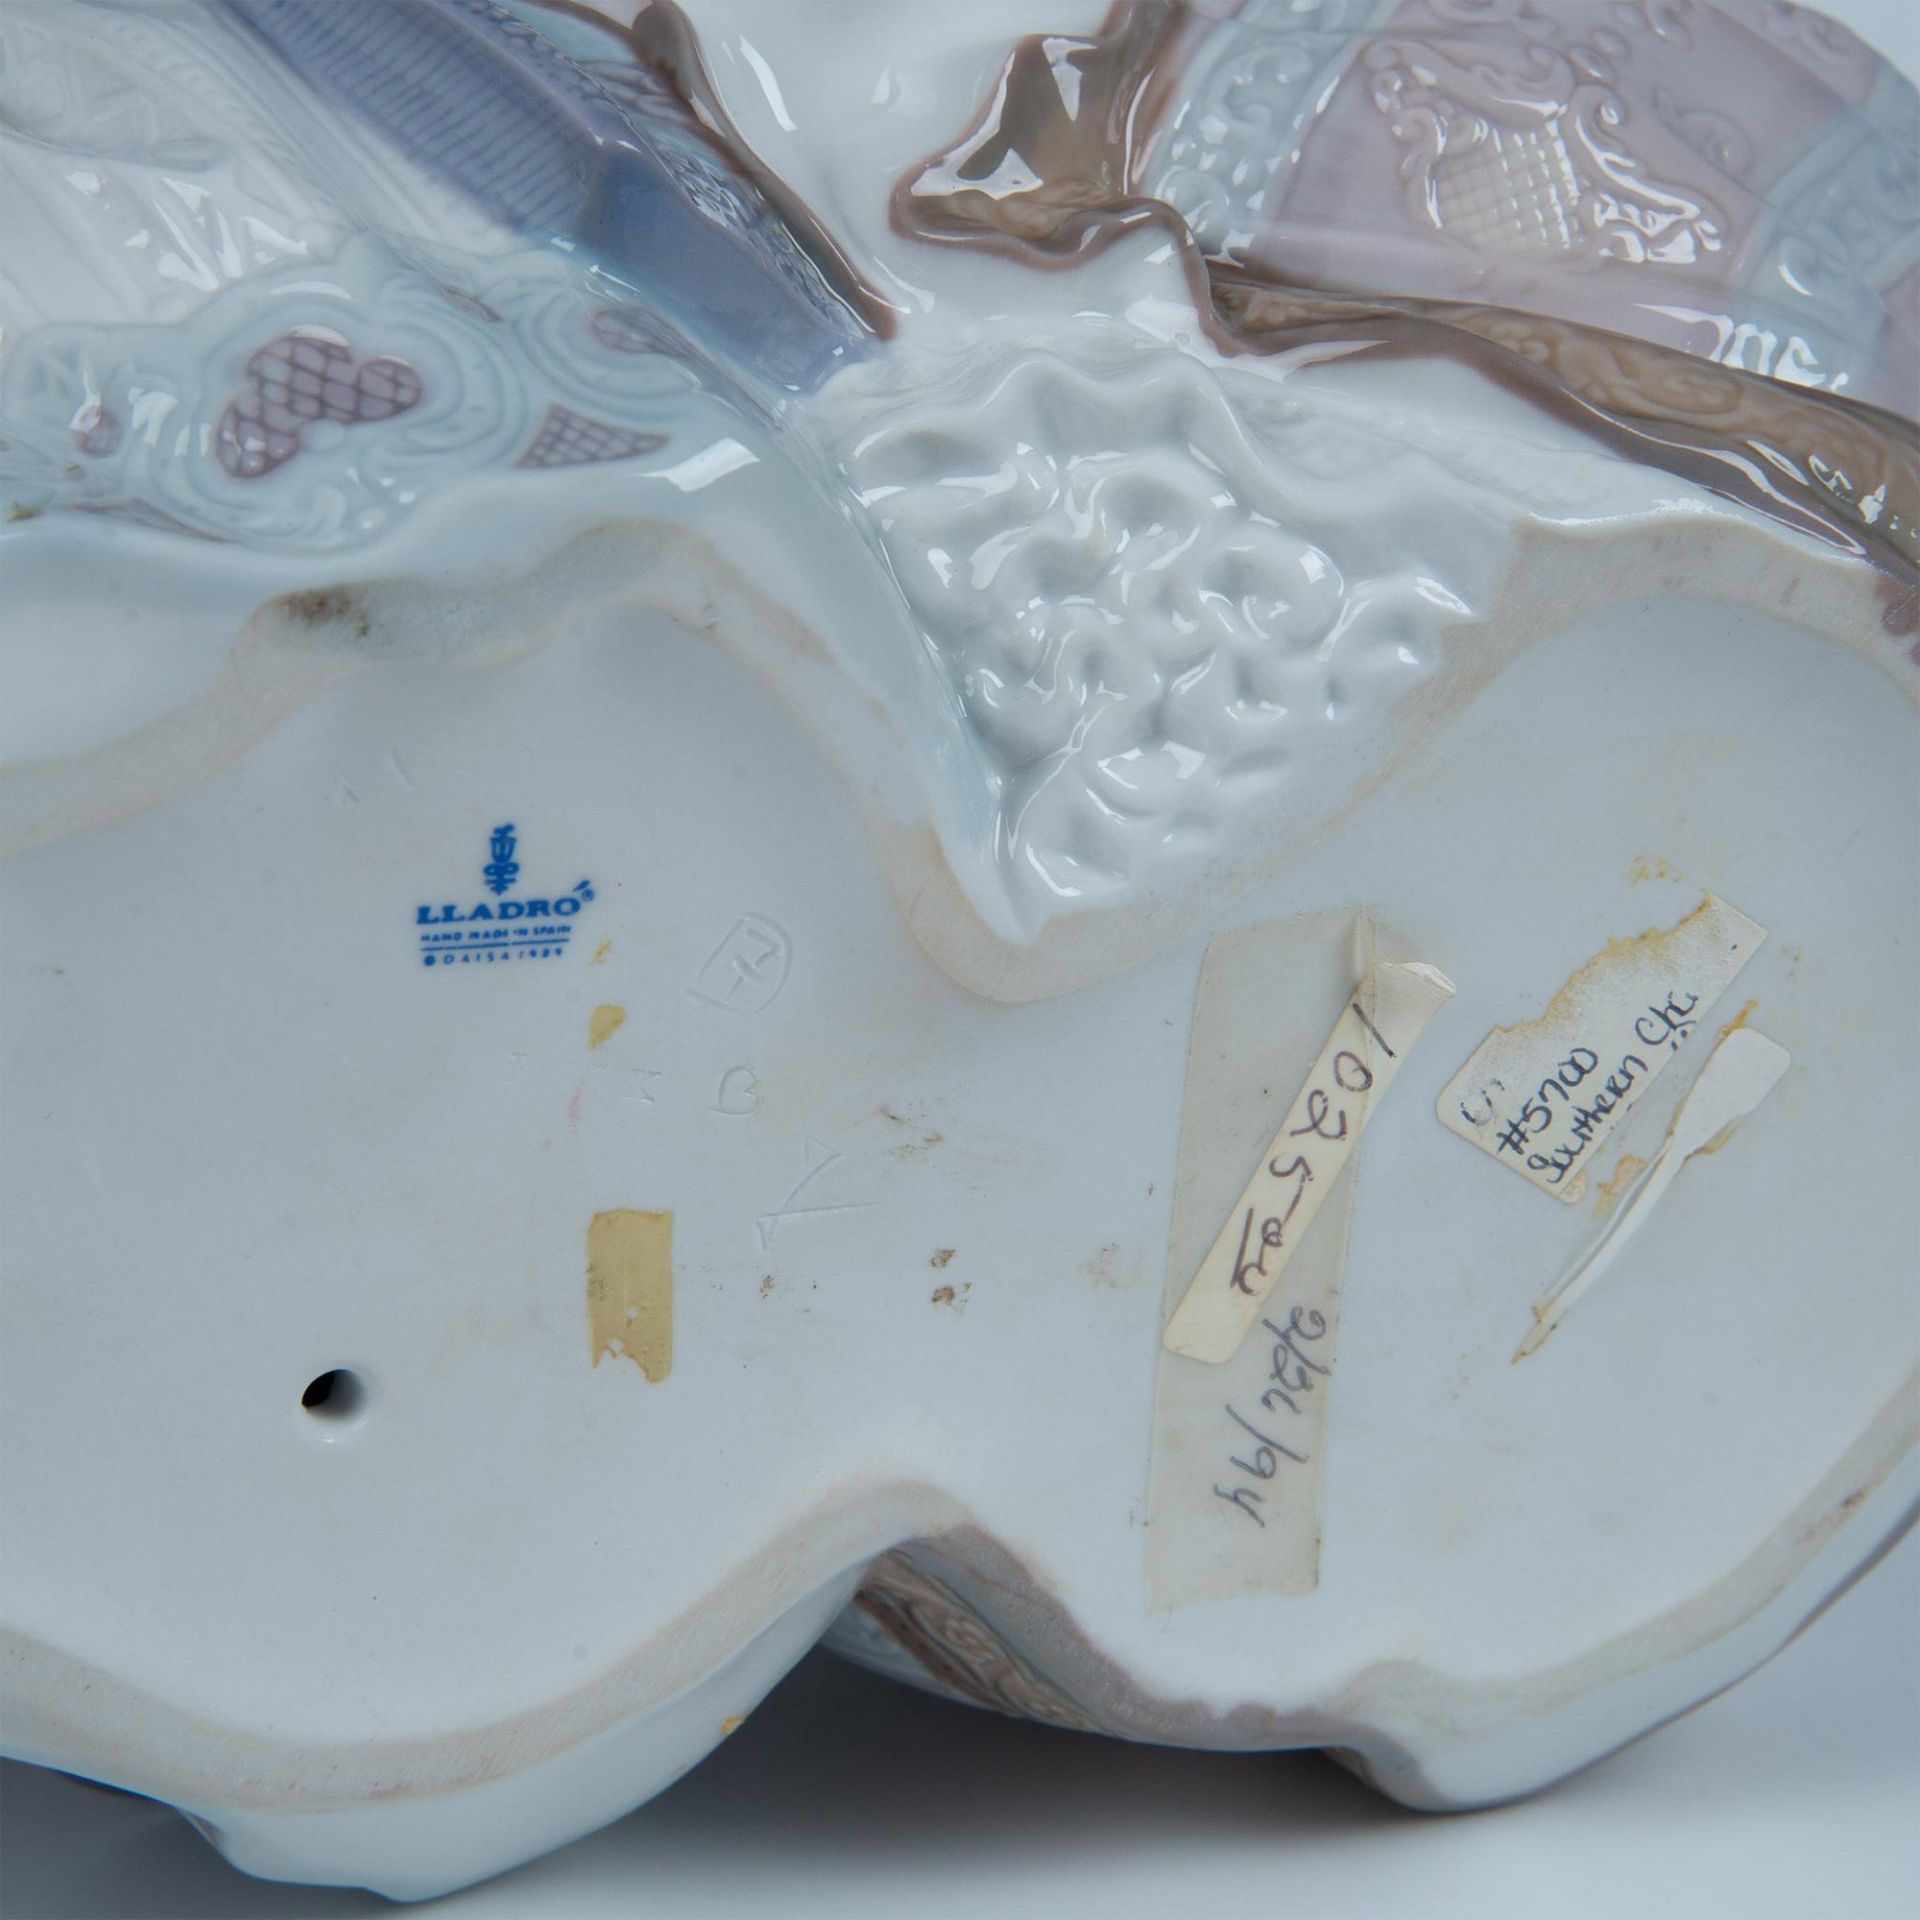 Southern Charm 1005700 - Lladro Porcelain Figurine - Bild 8 aus 8